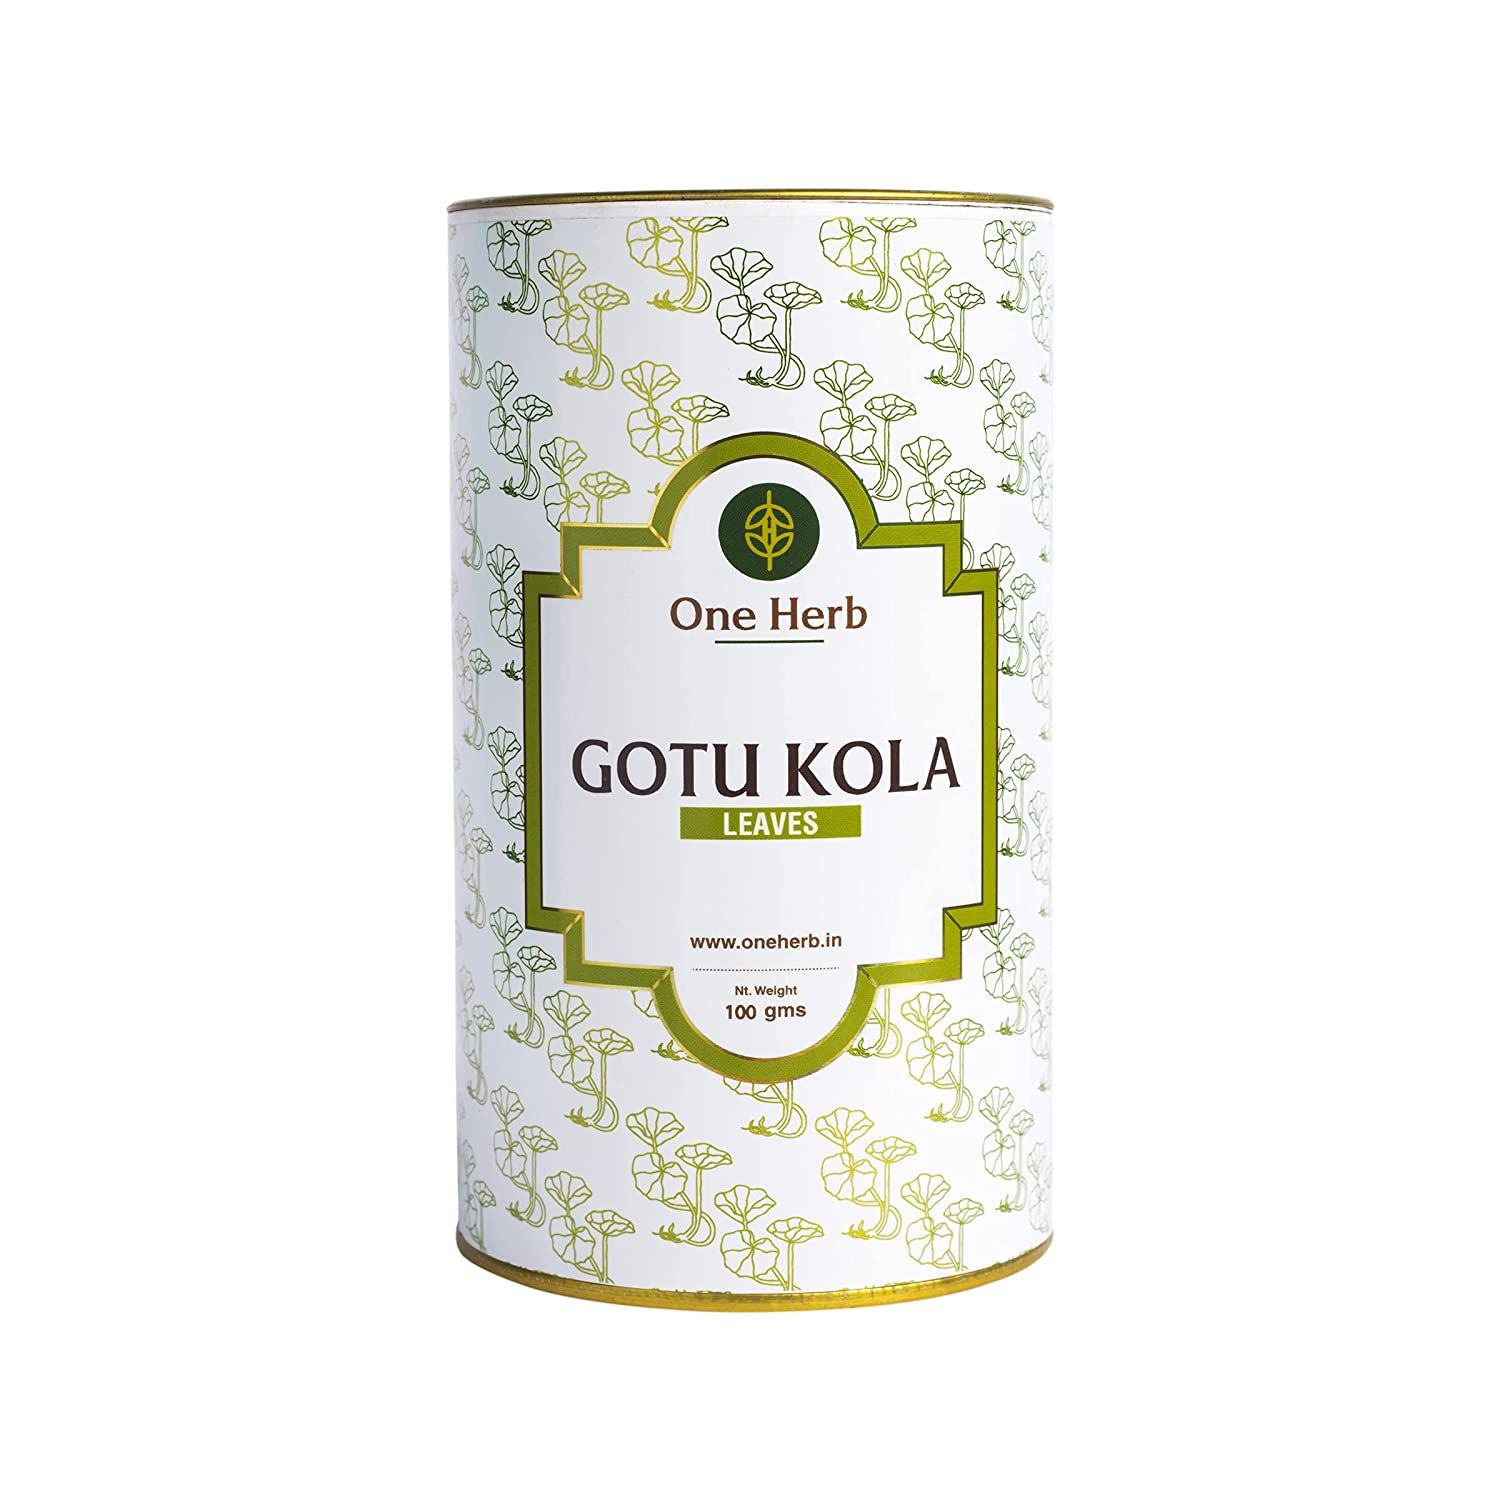 One Herb Gotu Kola Tea Image